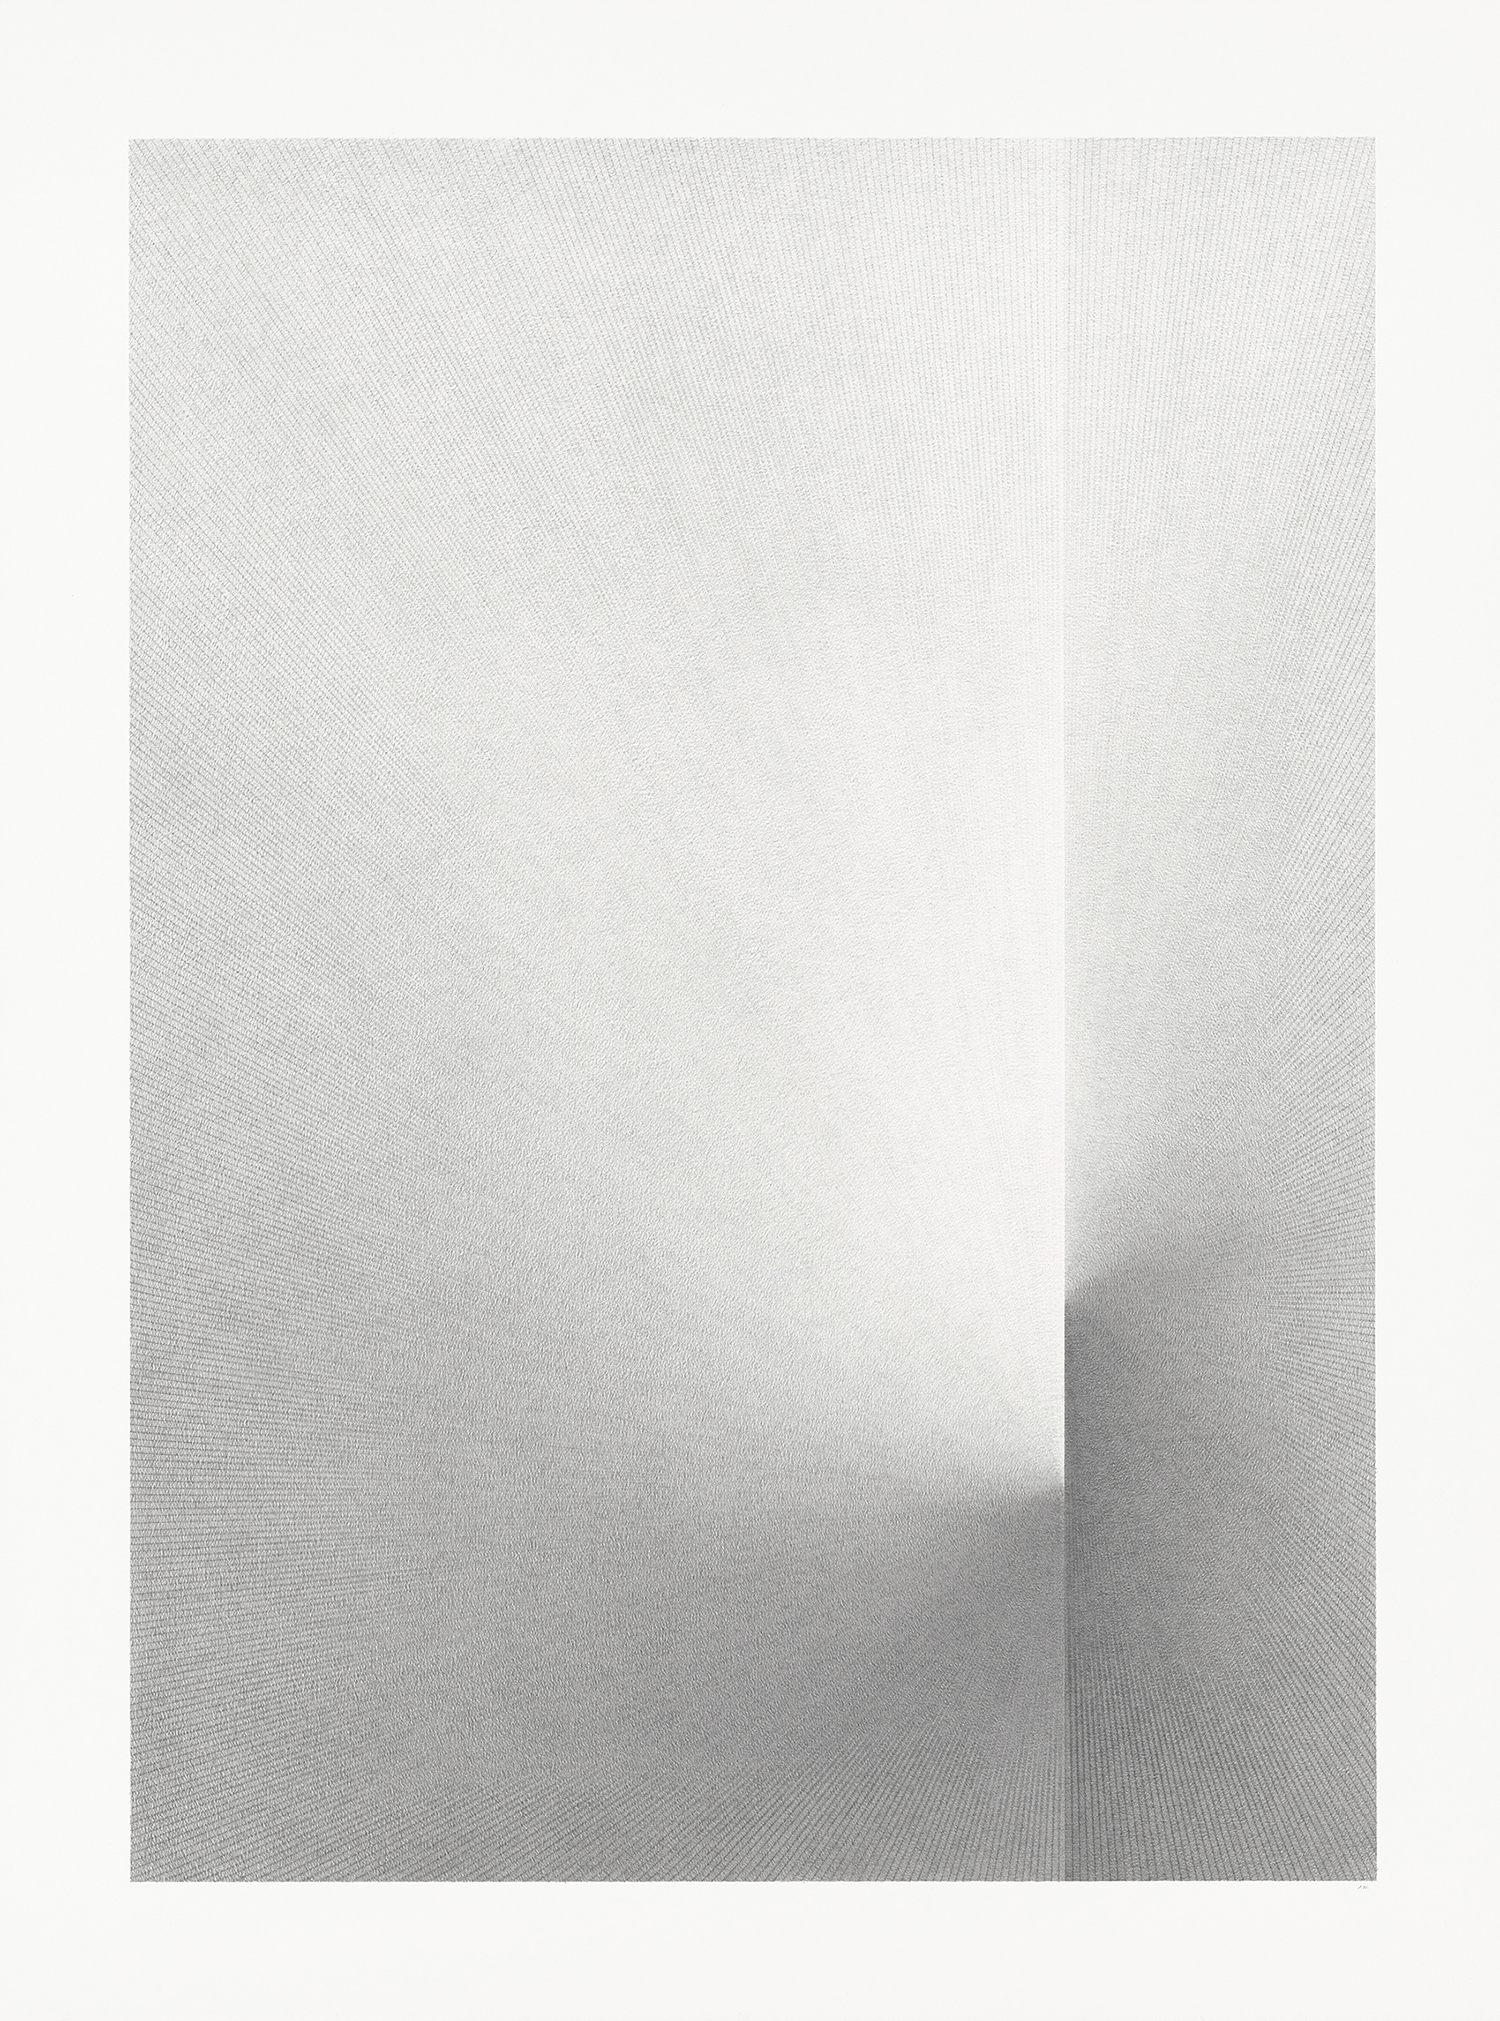 Alexandra Roozen, Two Tone (installation view), 160x120 cm (2x), pencil on paper, 2023